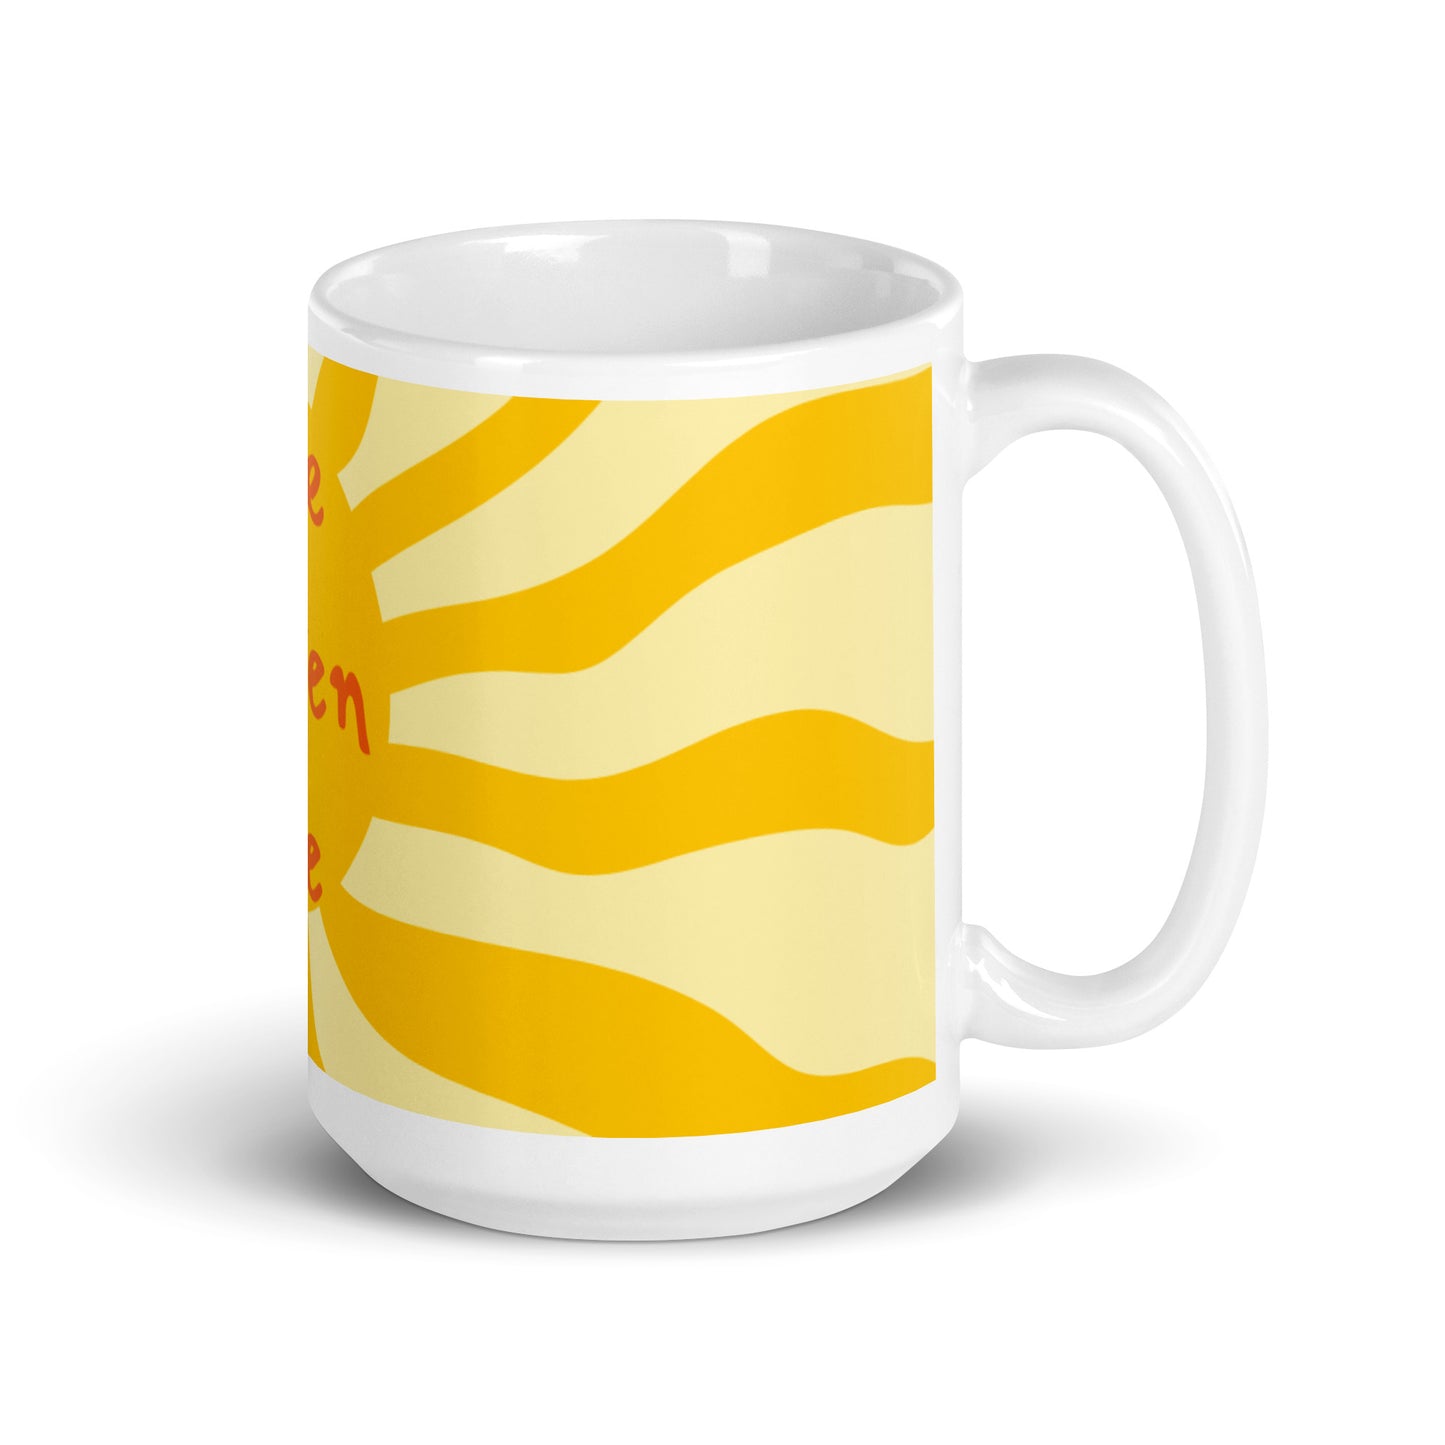 Sunshine White Glossy Mug - The Chosen One